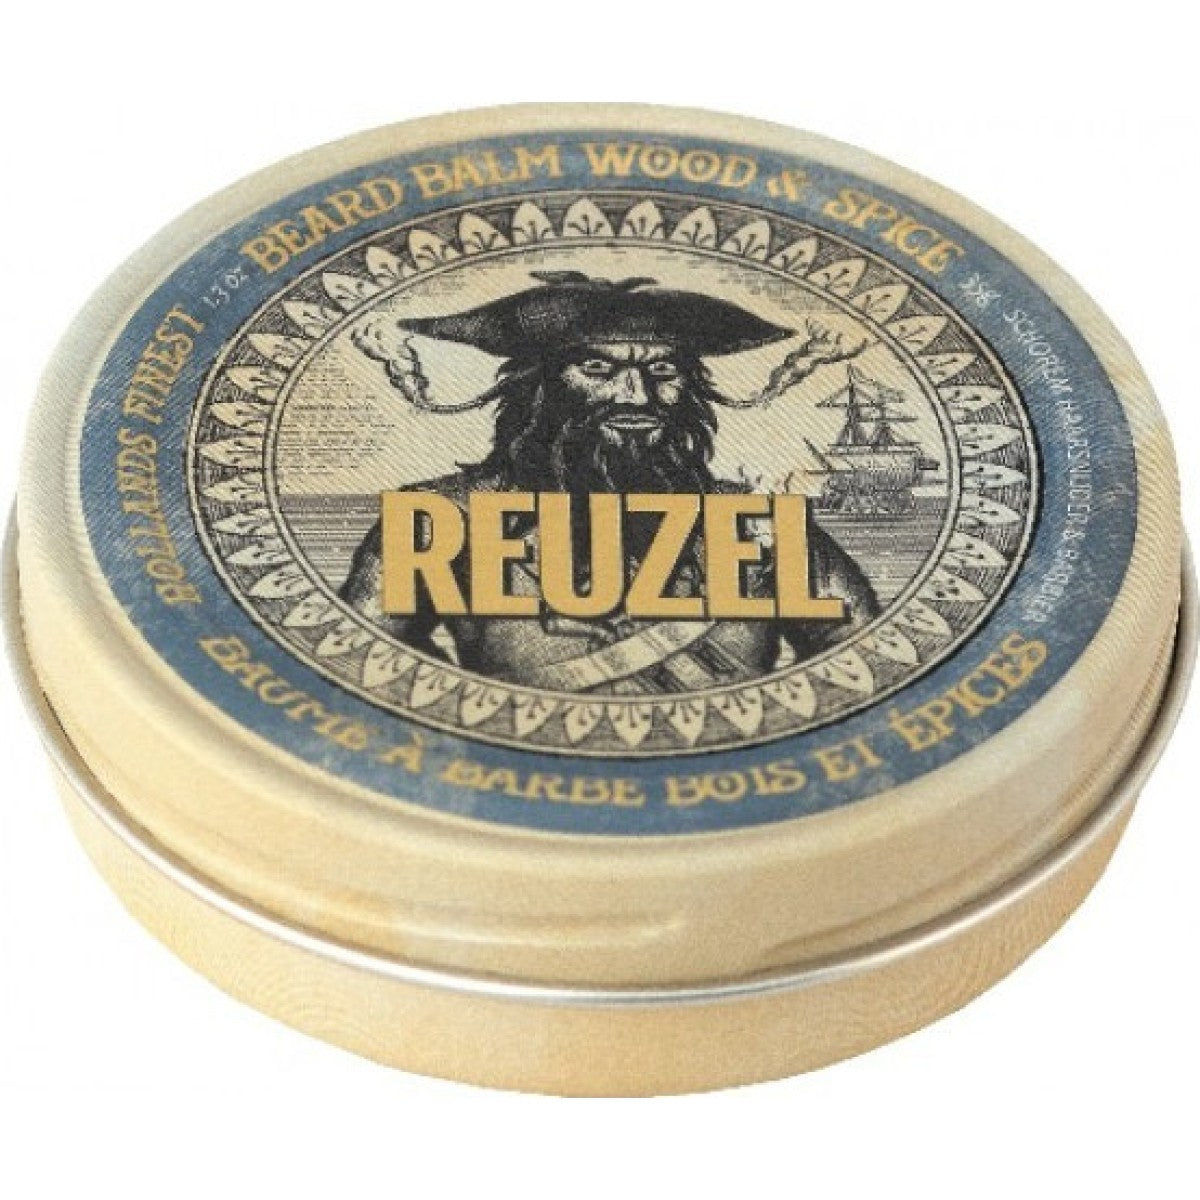 Reuzel Beard Balm Wood &amp; Spice 35gr